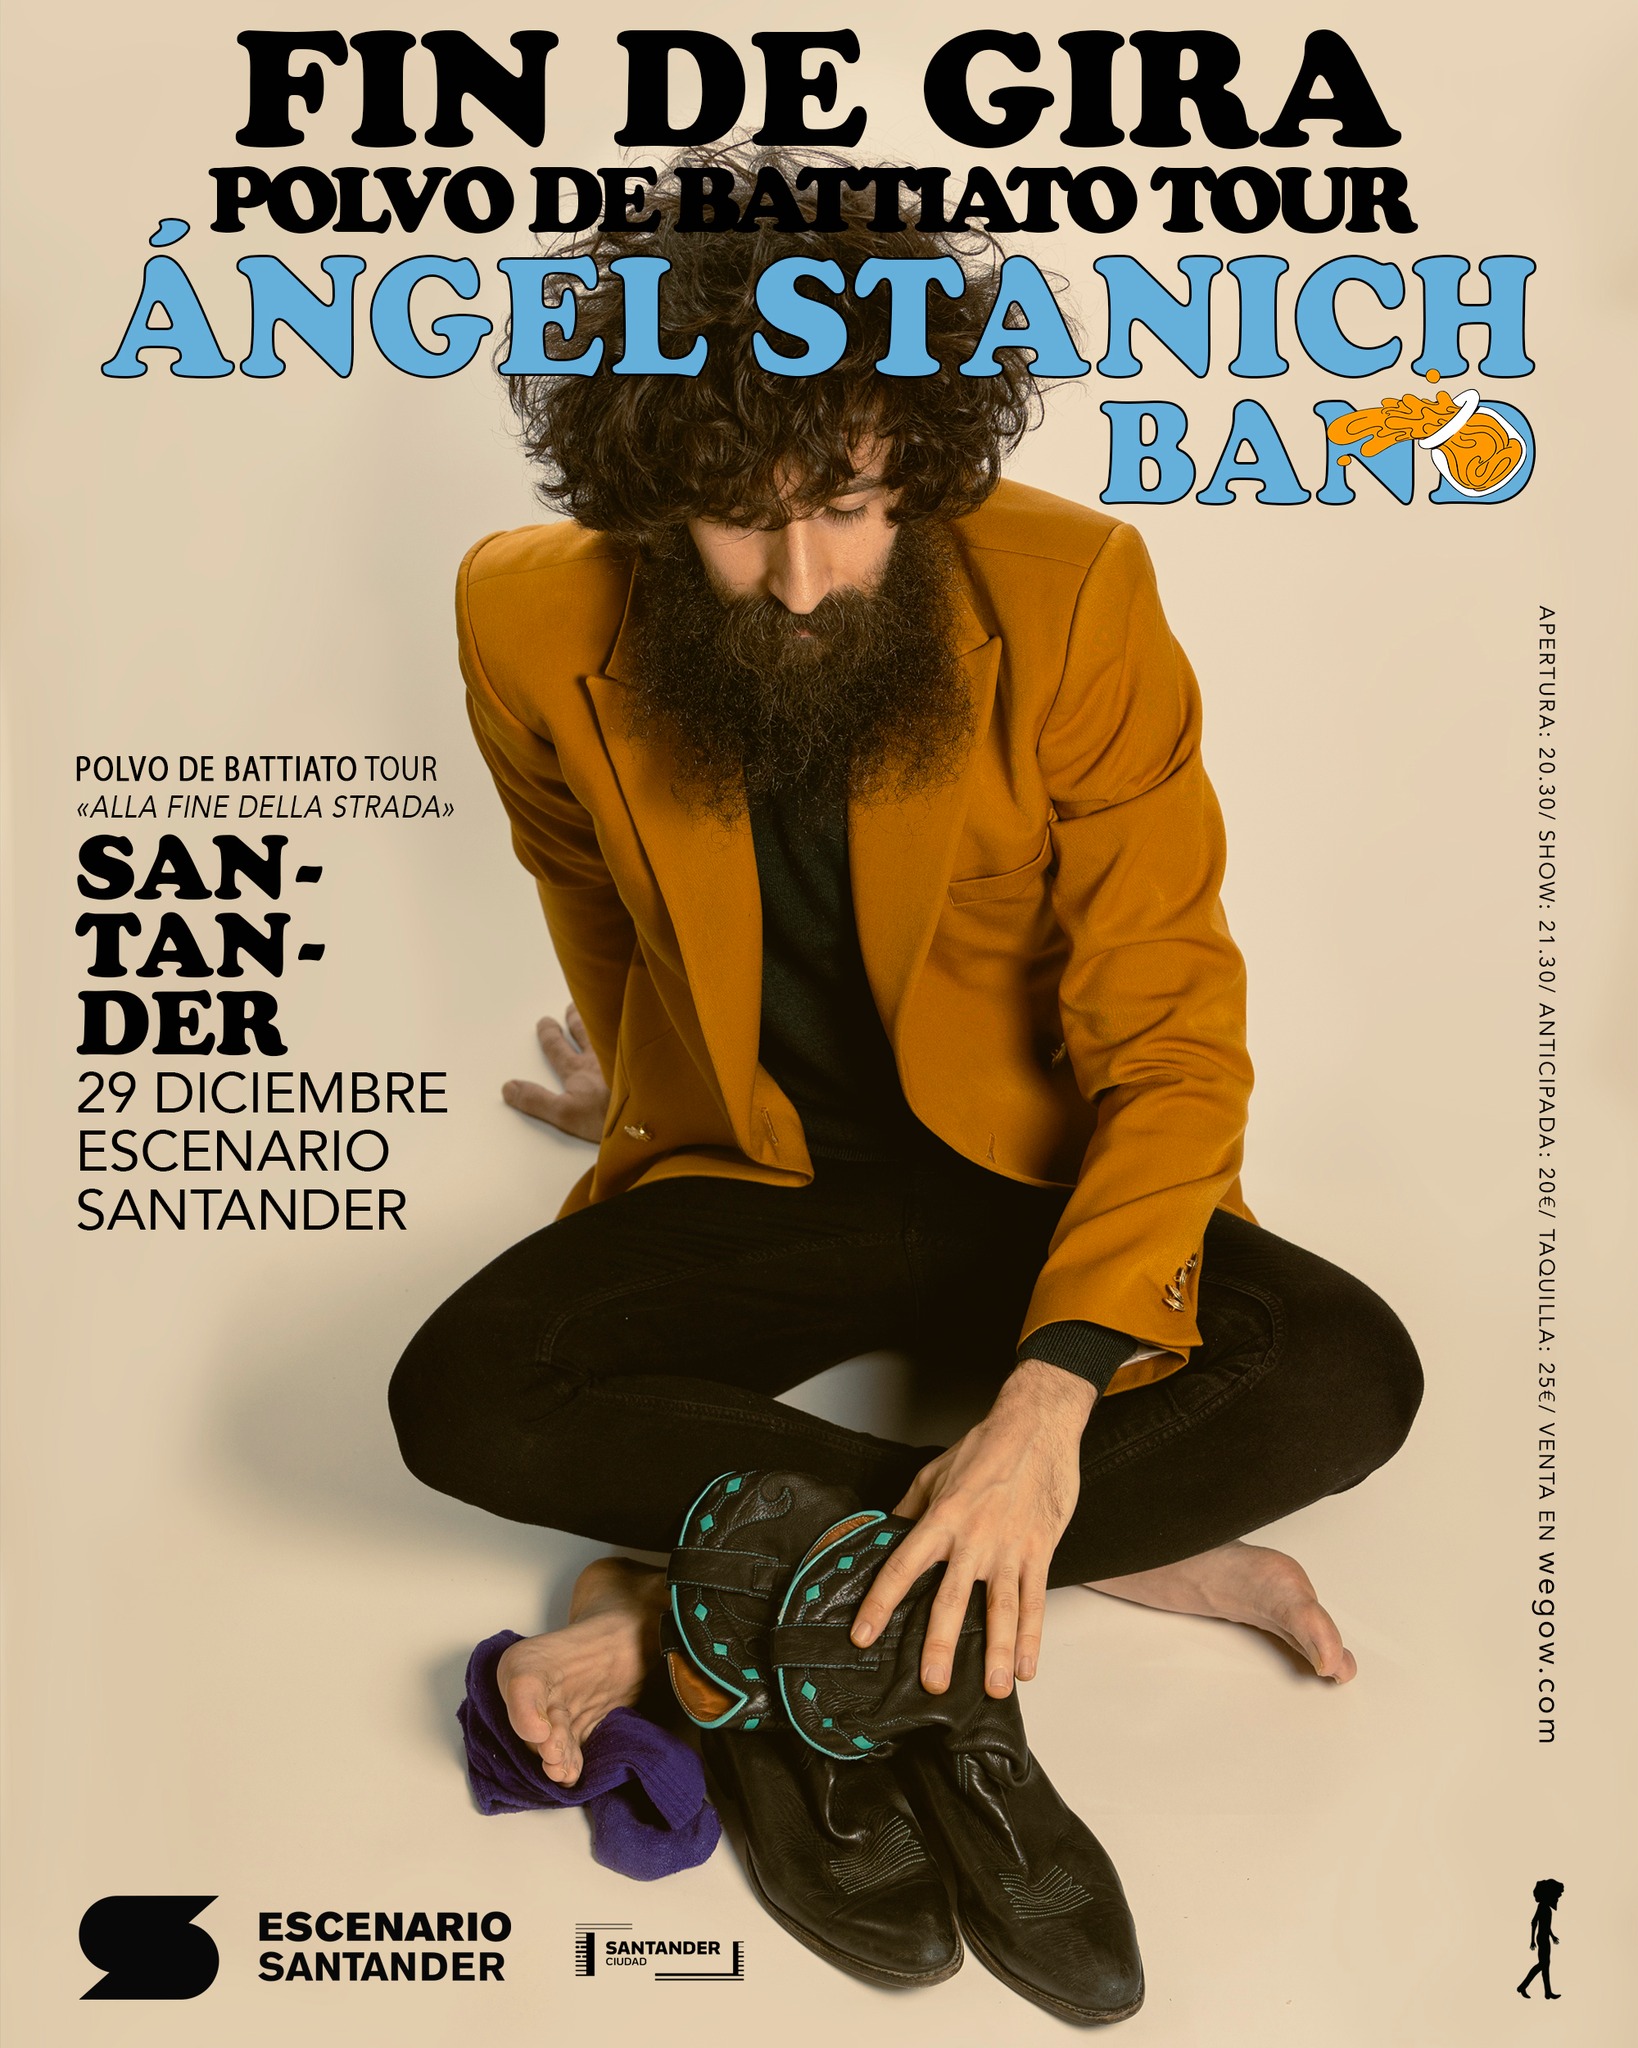 FIN DE GIRA PARA LA STANICH BAND – Angel Stanich – Web oficial